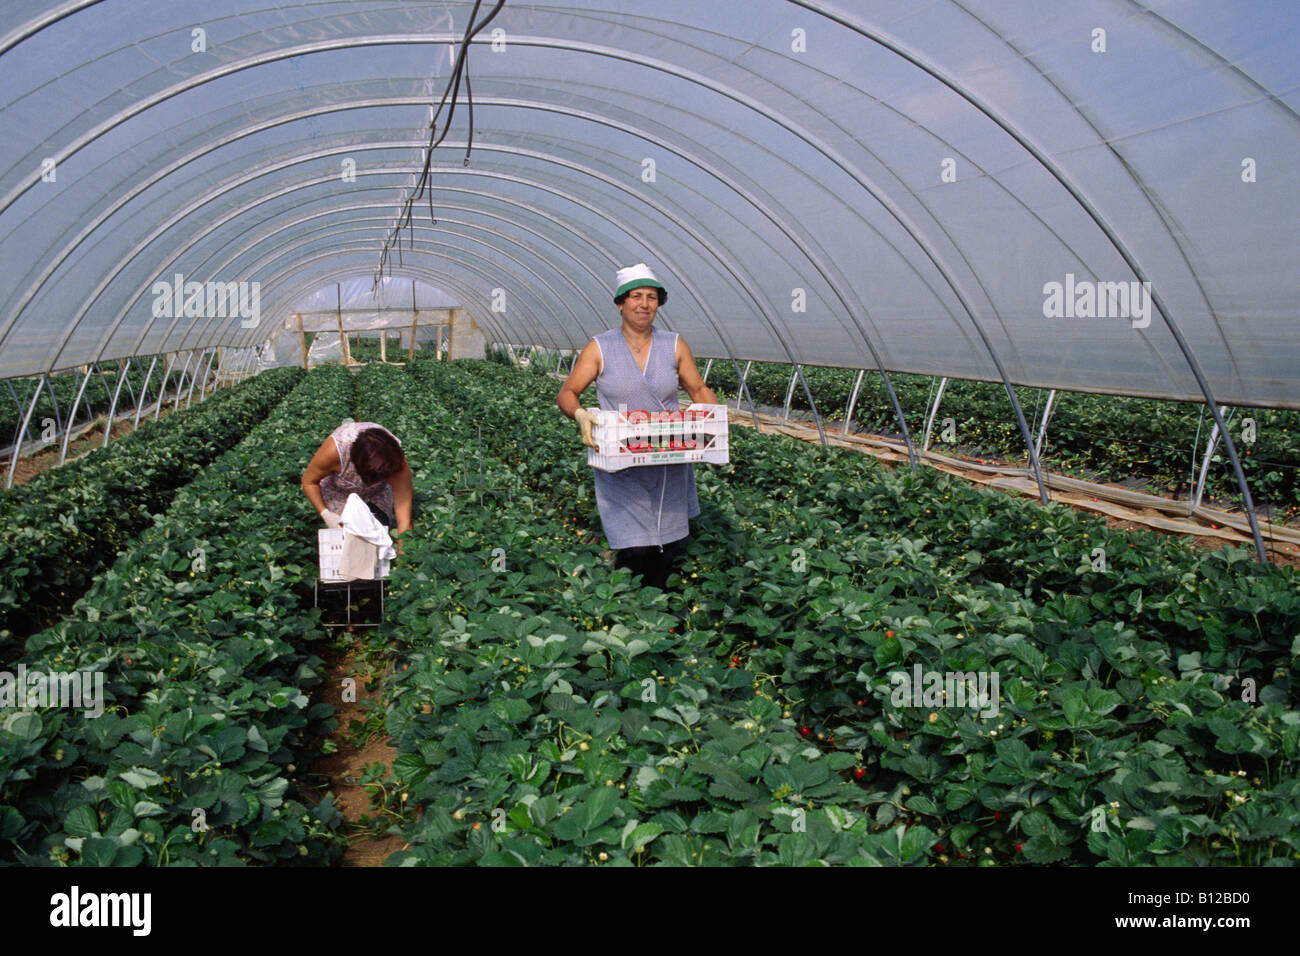 Italy, Lazio, Rome province, strawberries greenhouse, farmers working Stock Photo